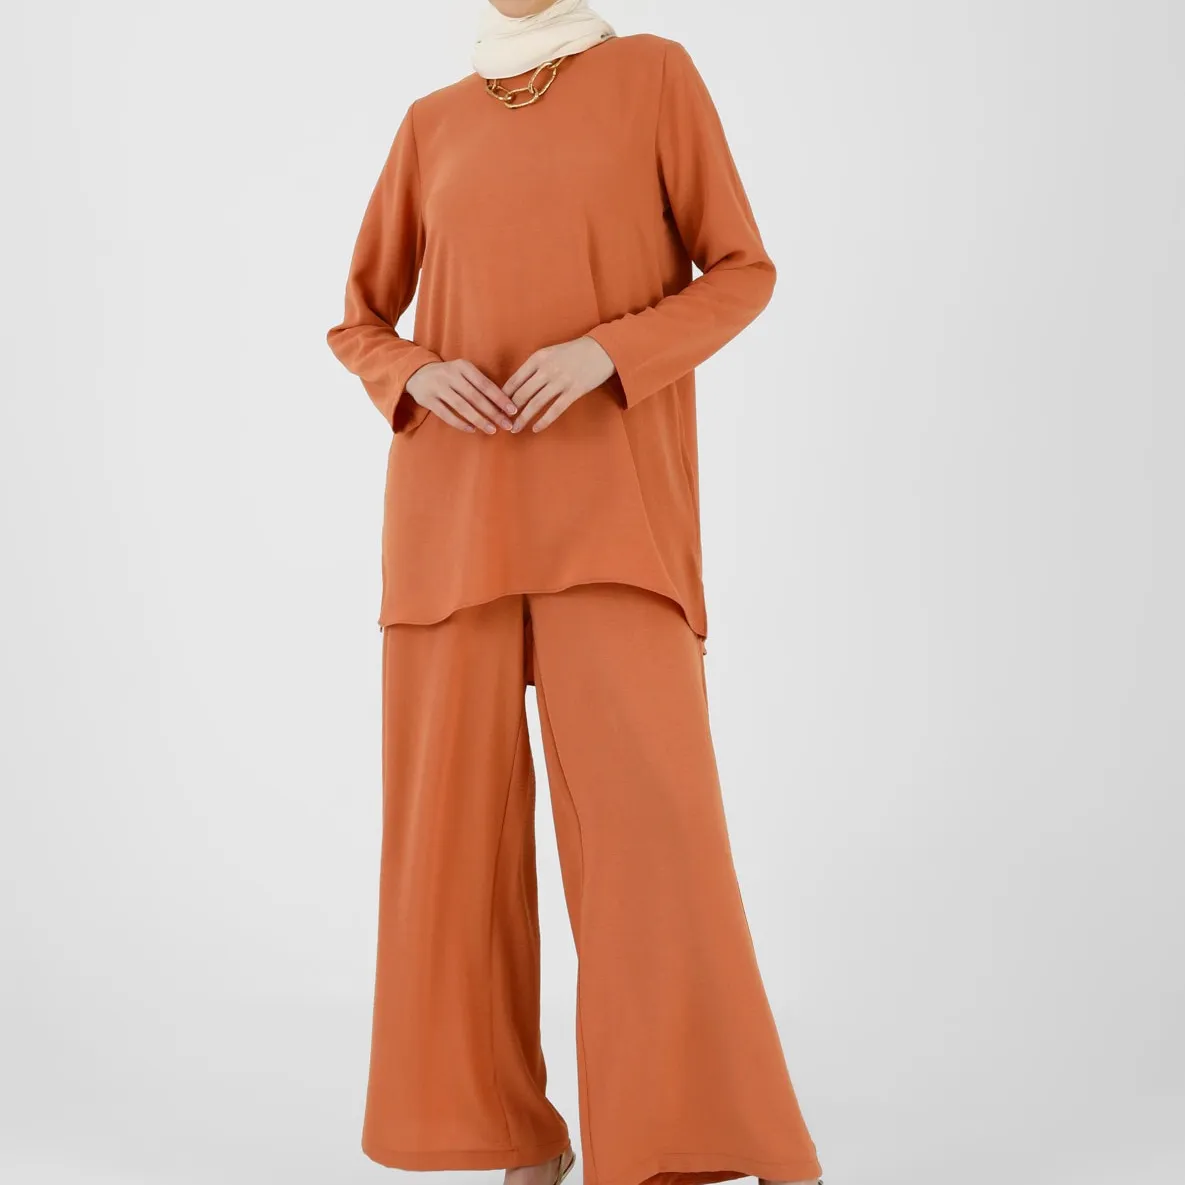 AM131C Customization muslim women blouse pant sets long sleeve new fashion elegant islamic clothing office women lady suit